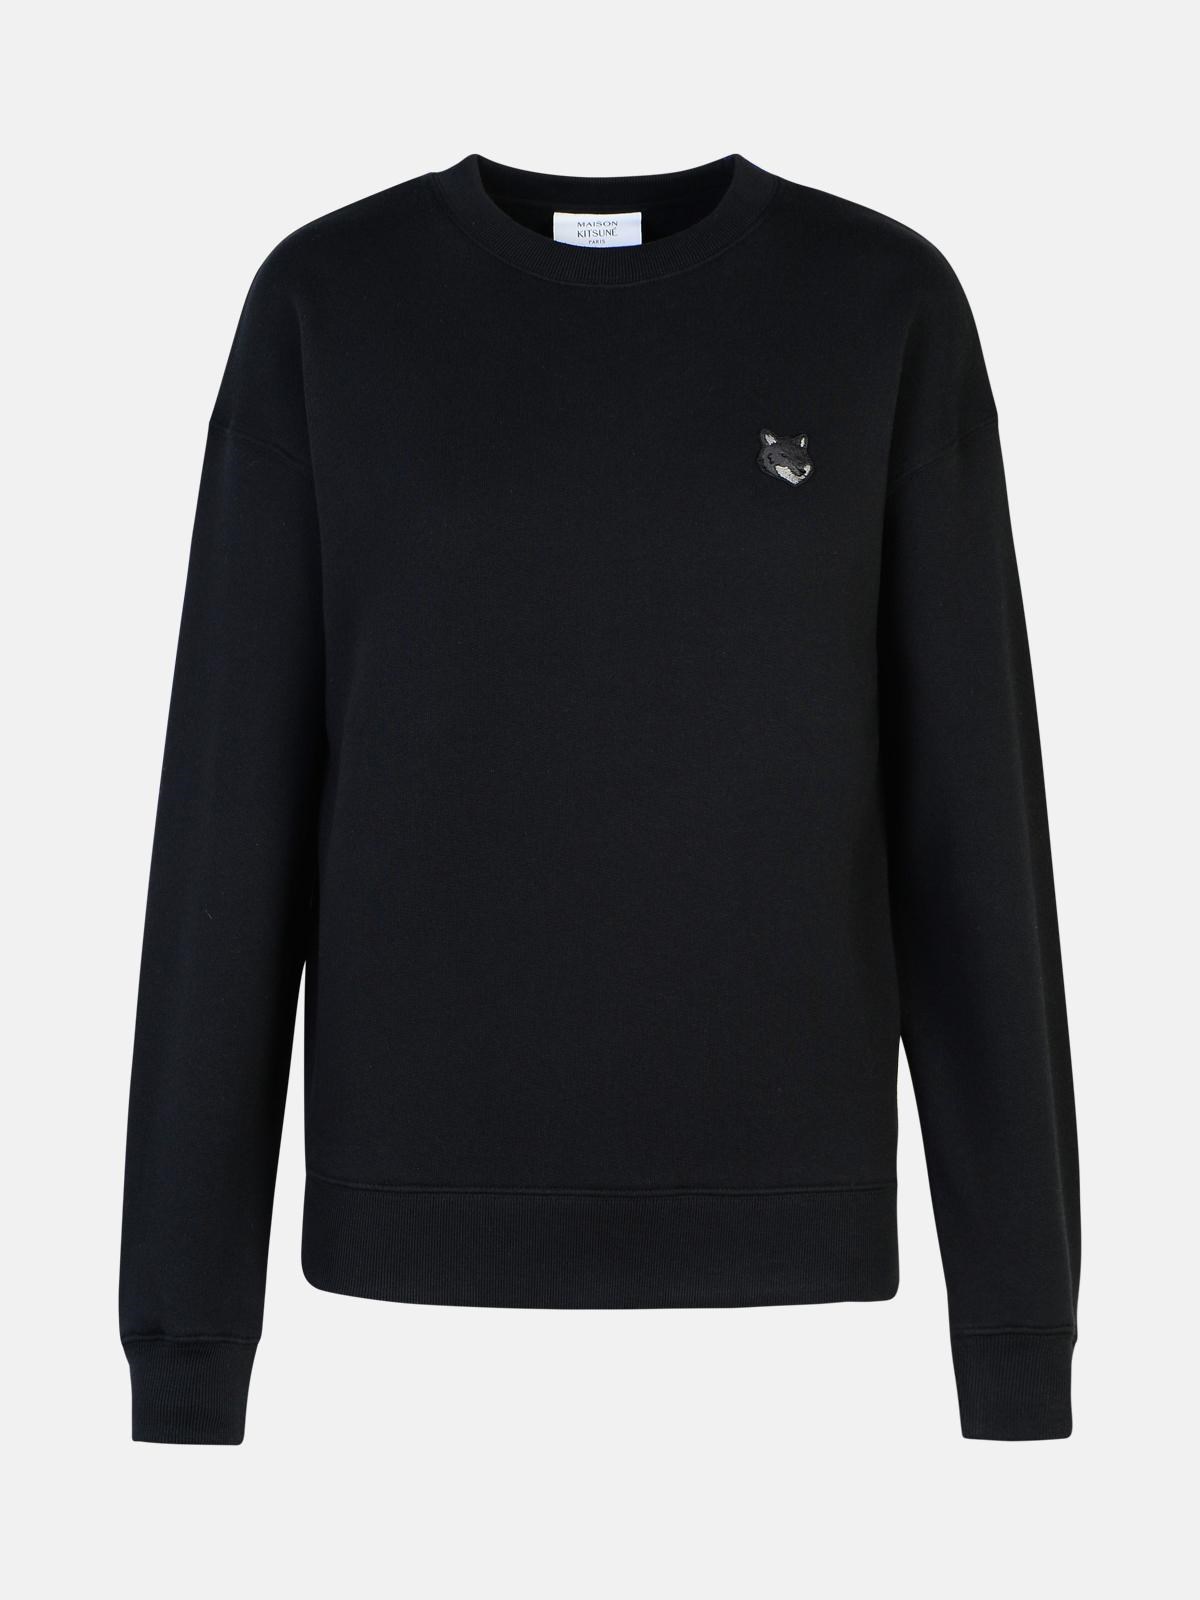 Maison Kitsuné 'bold Fox Head' Black Cotton Sweatshirt